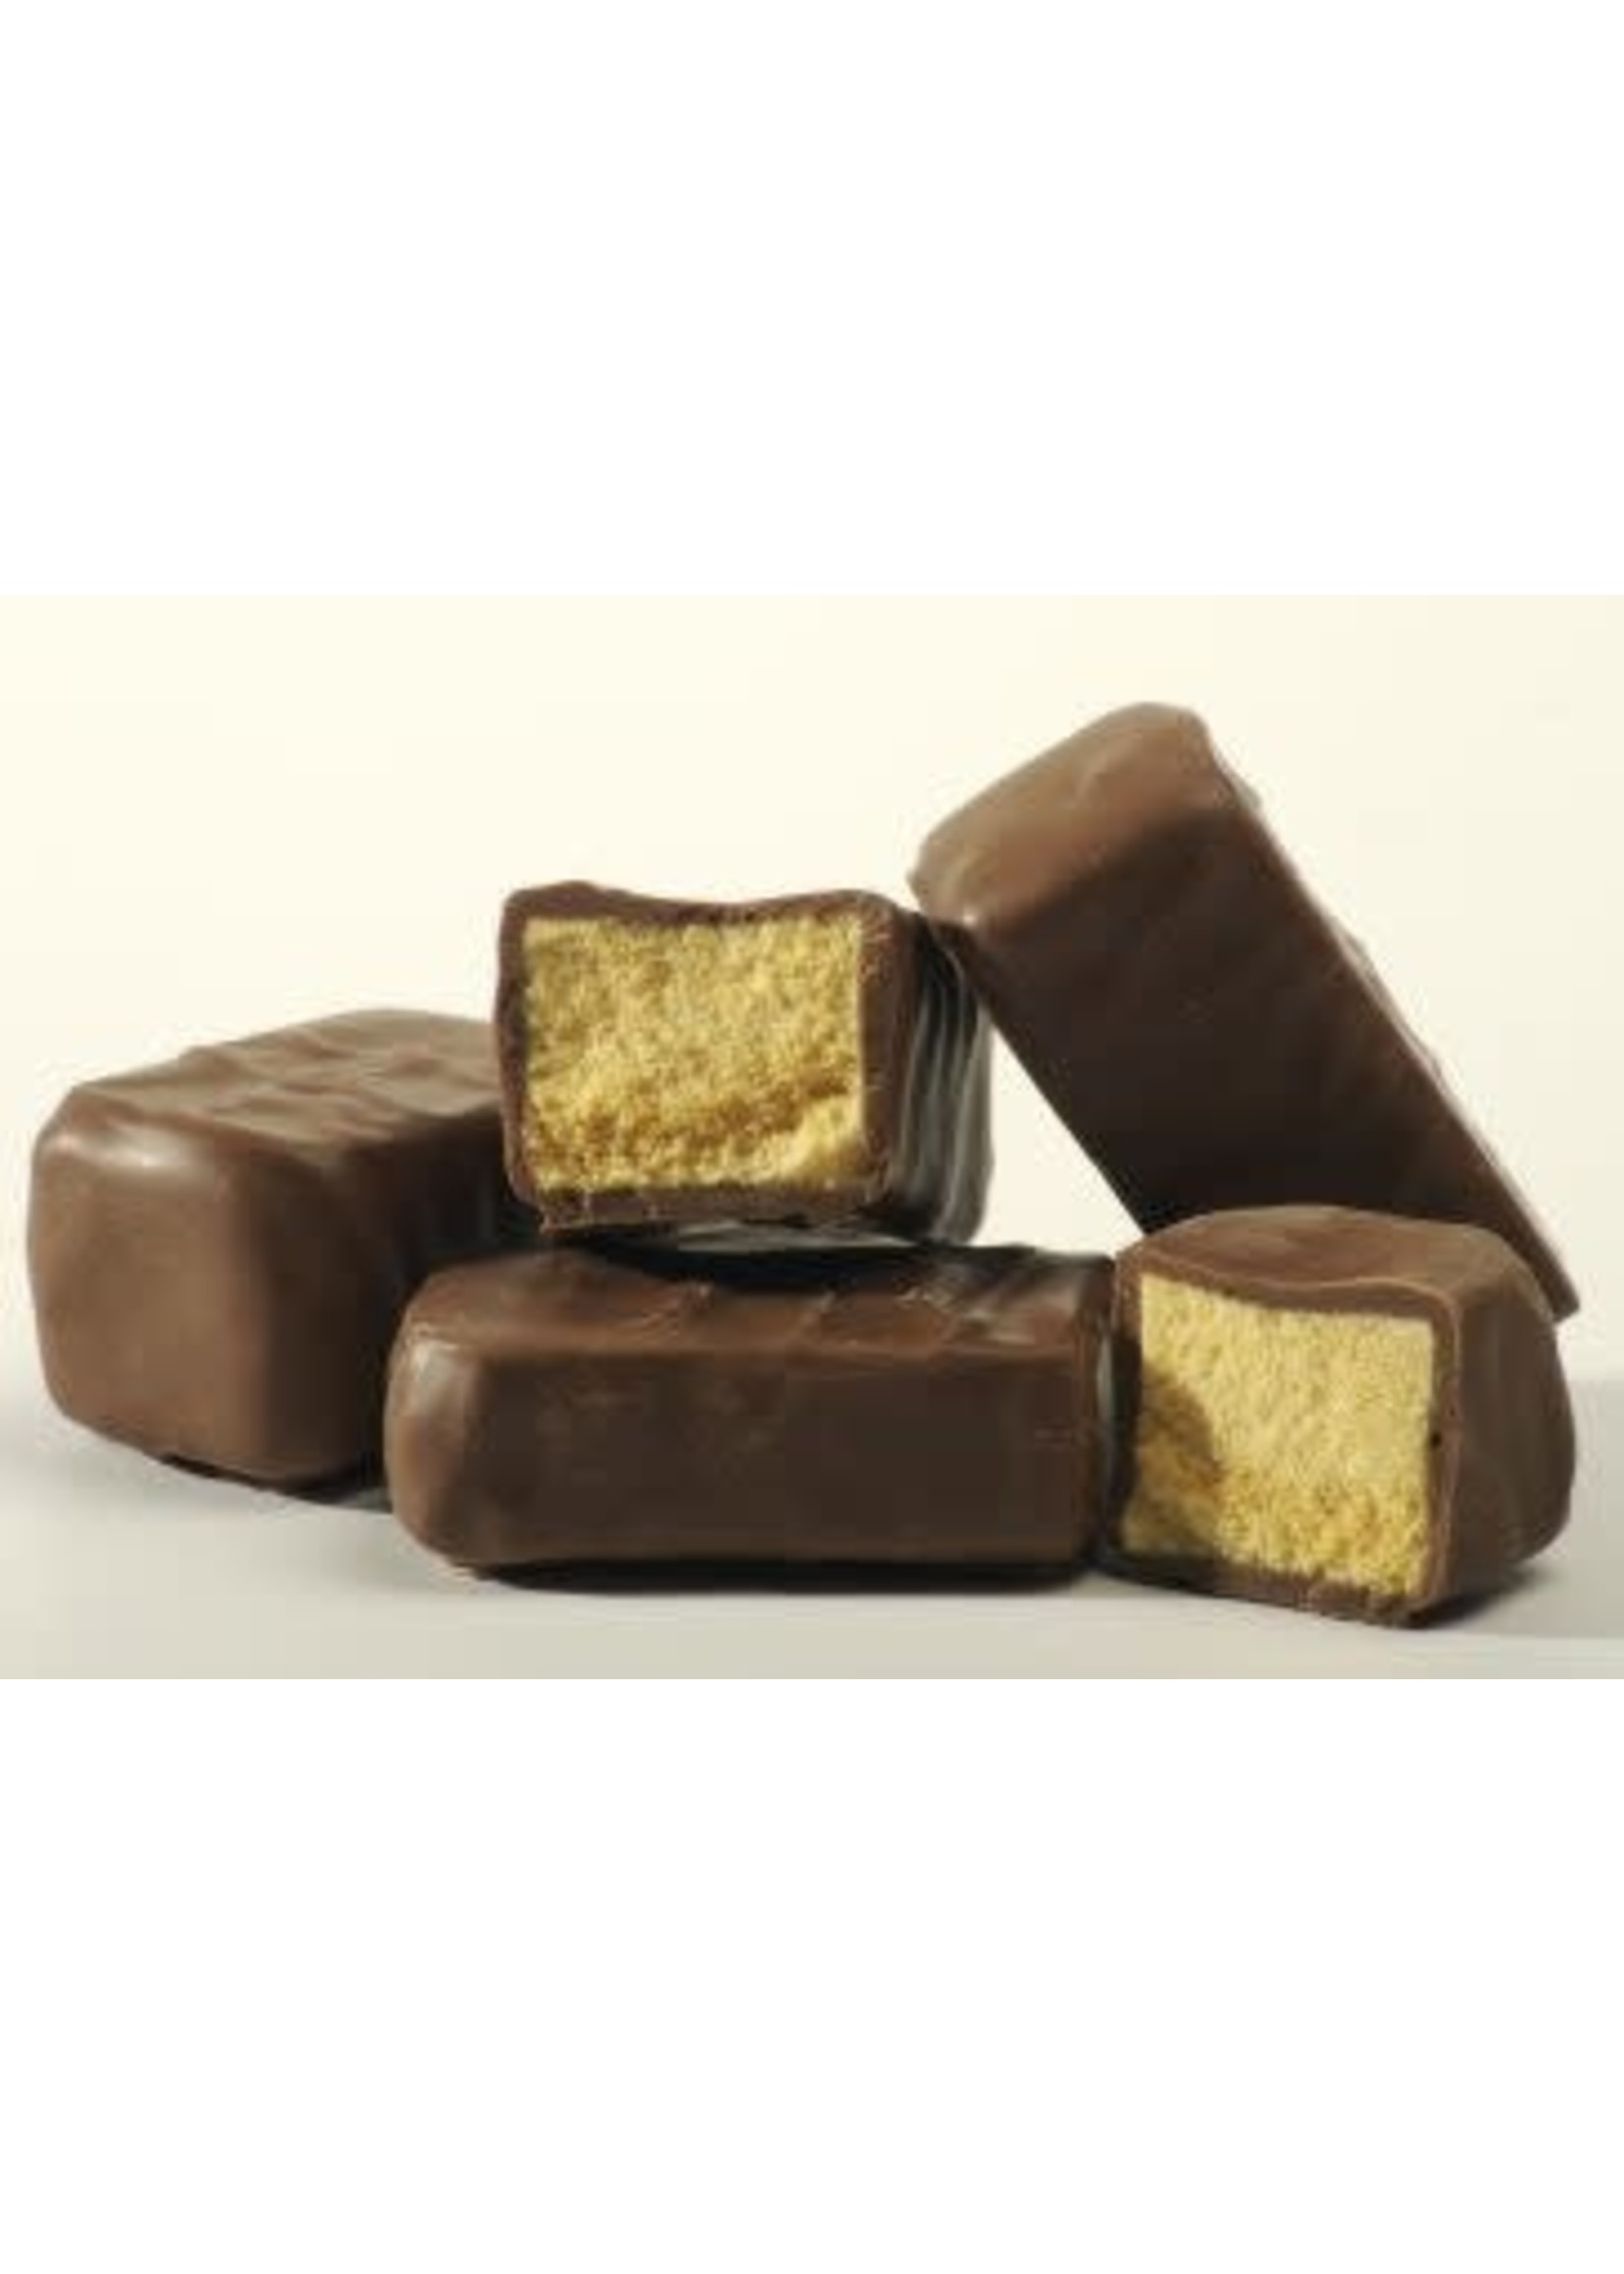 Brittles & More Maple Milk Chocolate Sponge Toffee